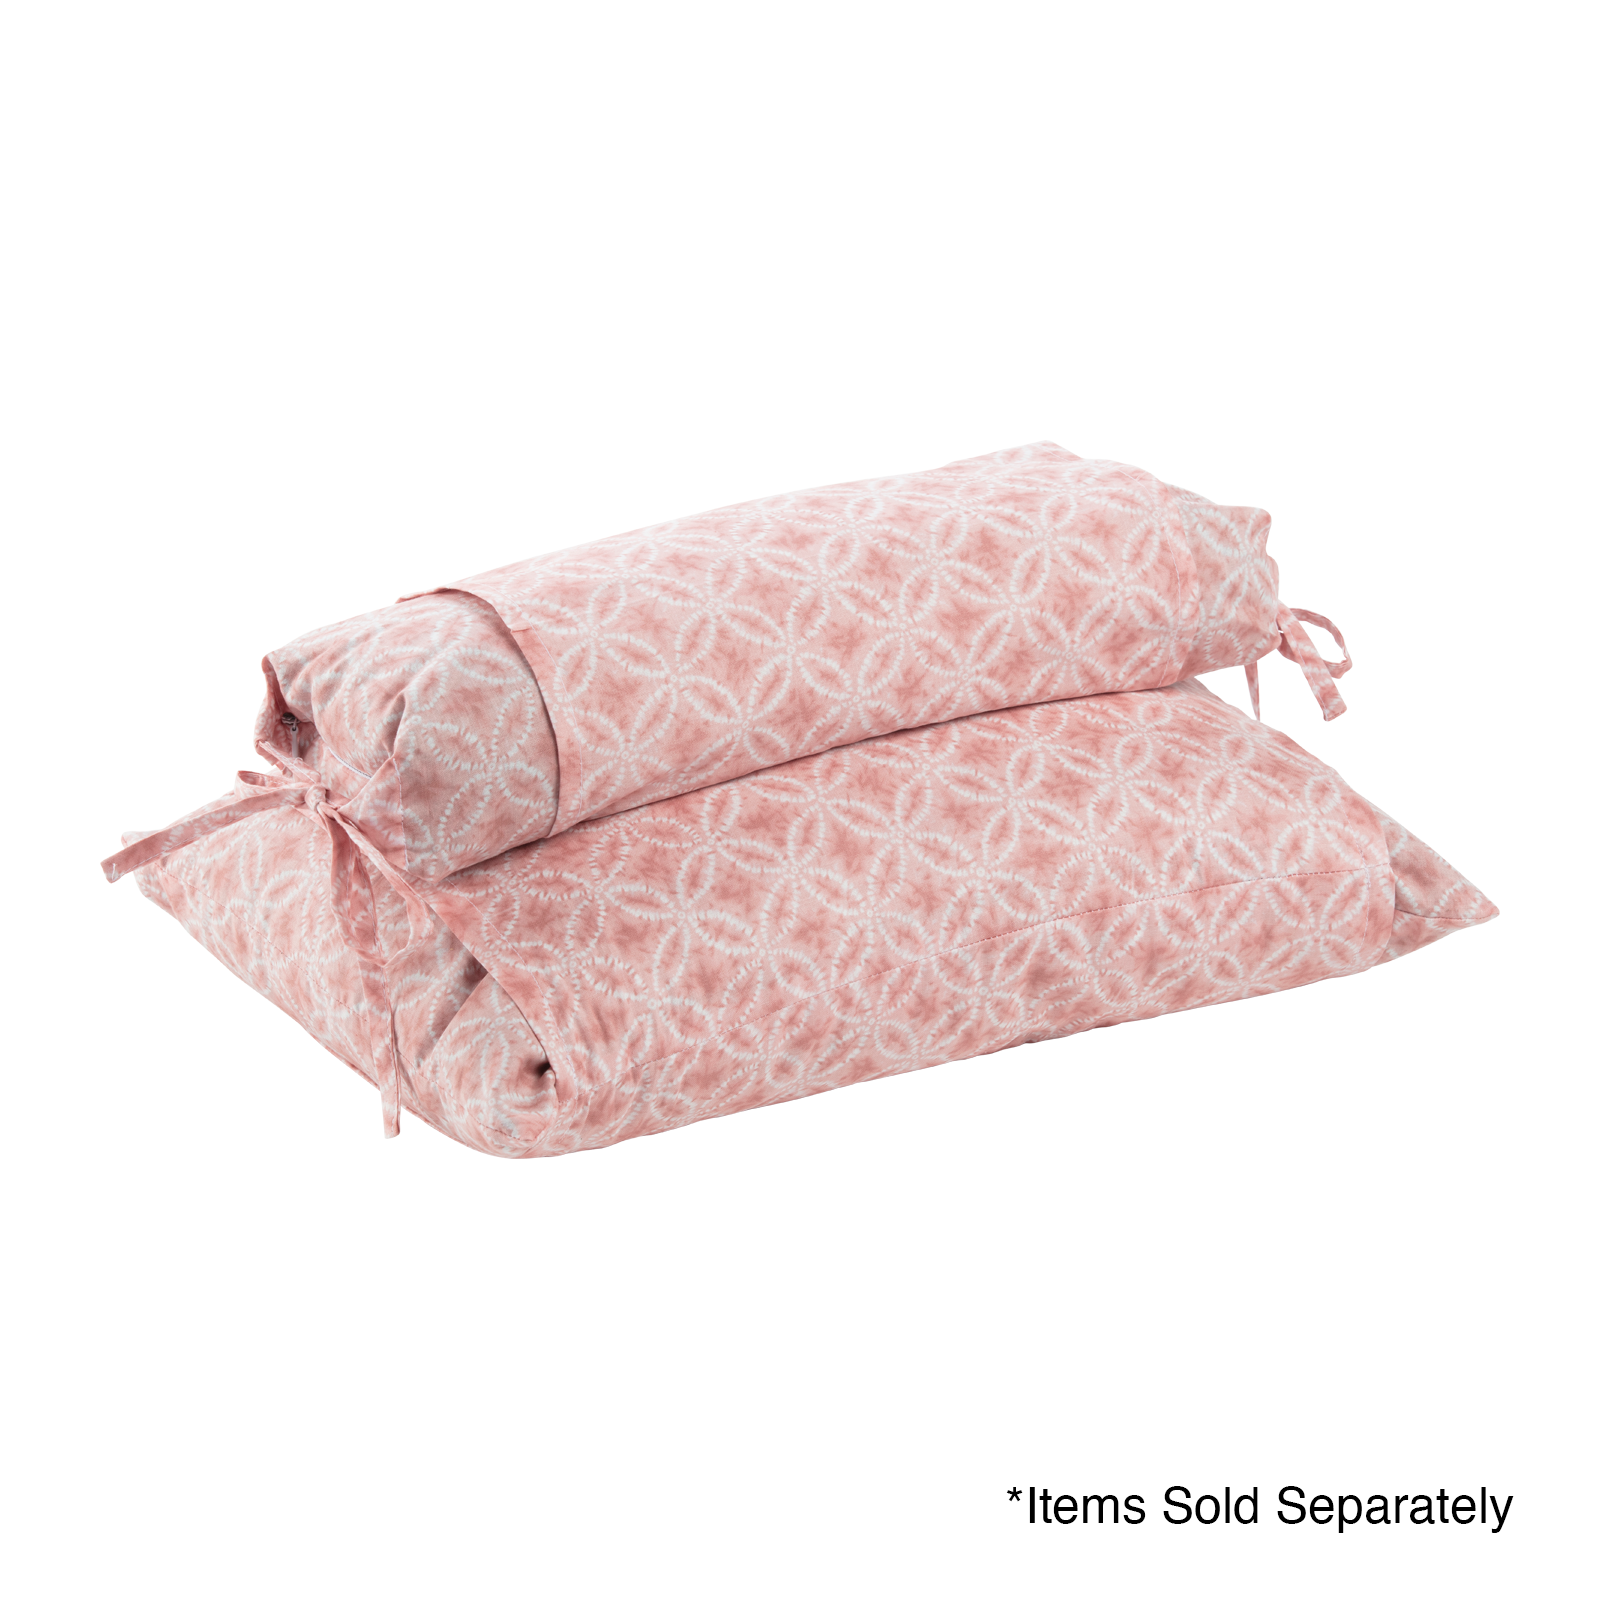 J-Life Taidai Pink Buckwheat Hull Pillow